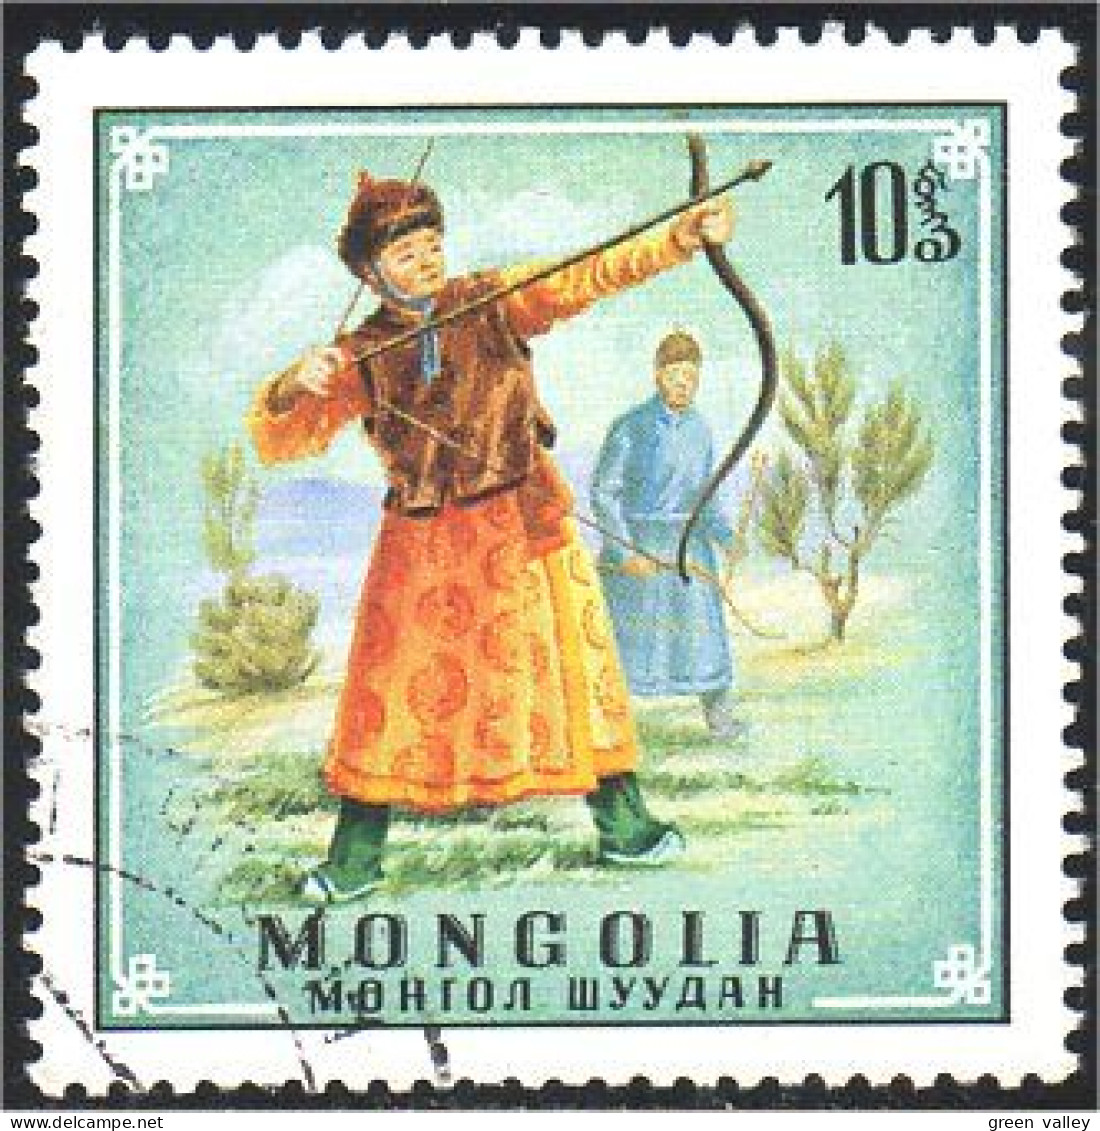 620 Mongolie Archer Traditionnel Traditional Archer (MNG-29) - Bogenschiessen